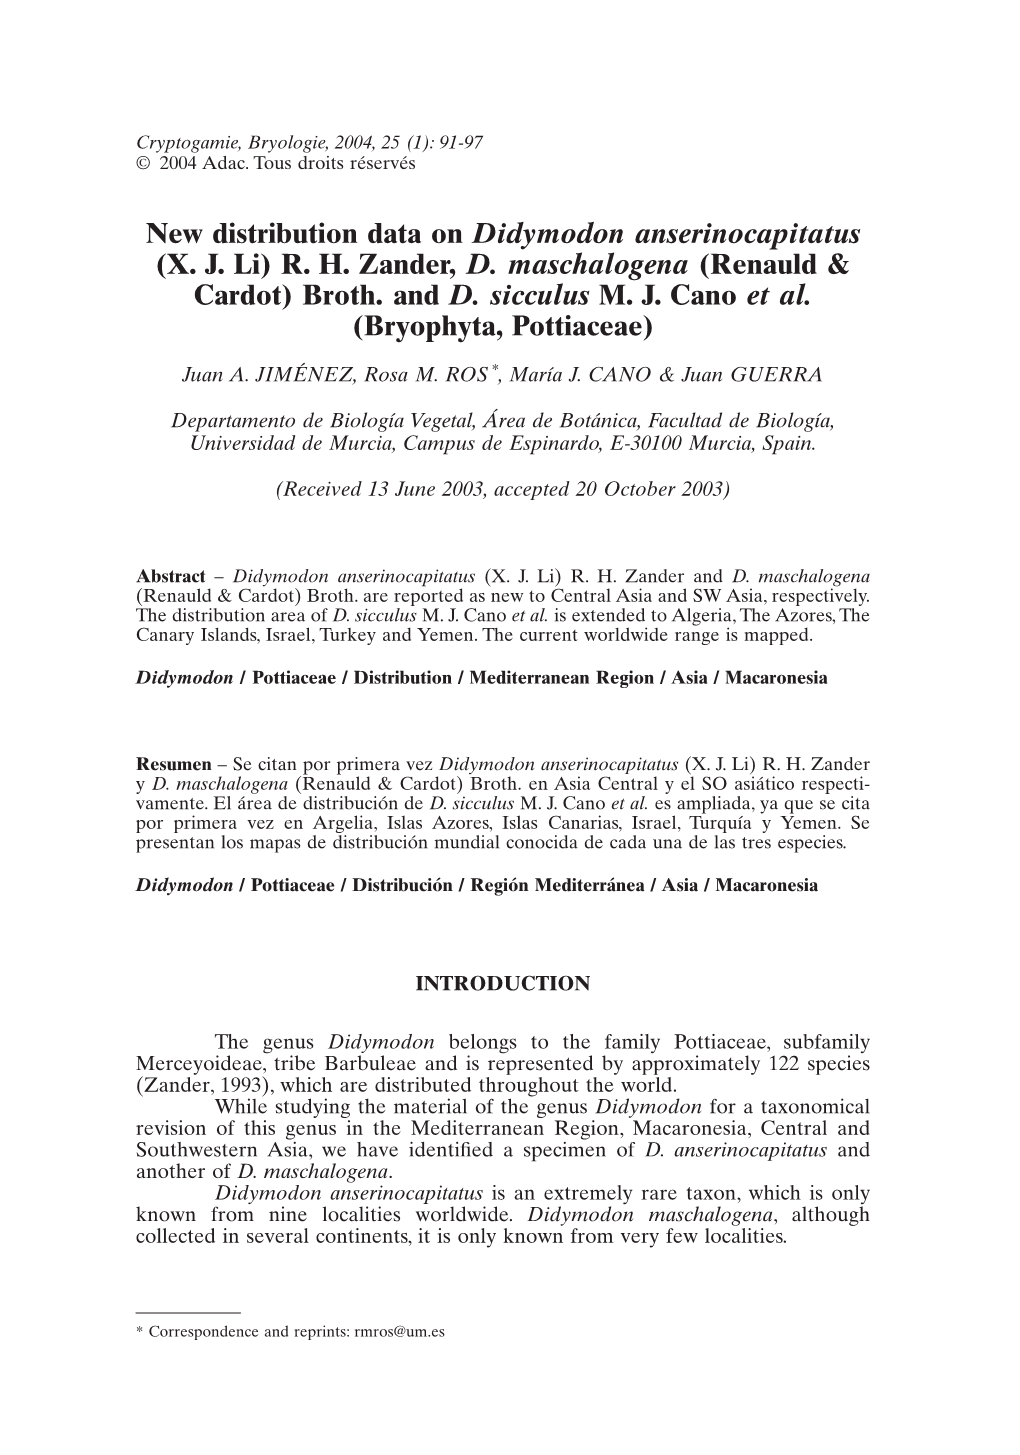 New Distribution Data on Didymodon Anserinocapitatus (X. J. Li) R. H. Zander, D